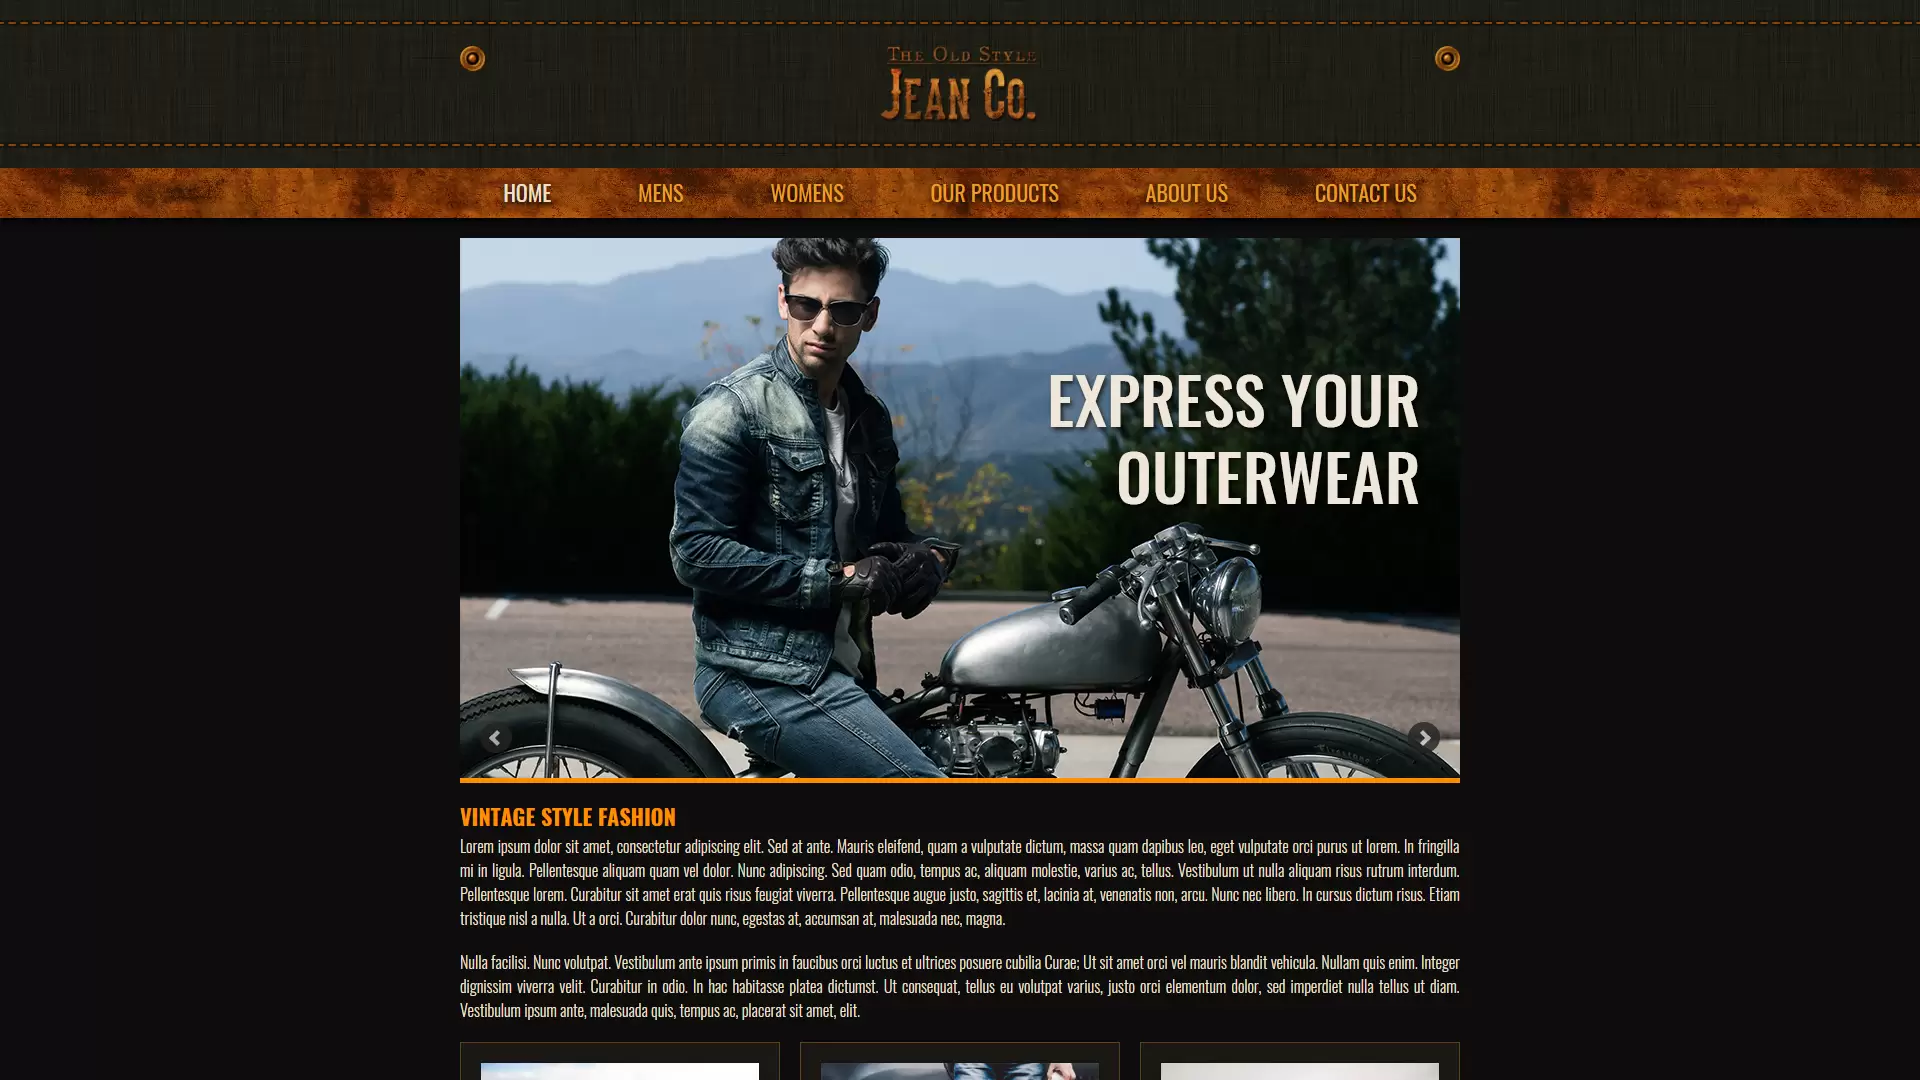 Smart Web Creative - Clothing Company Mockup Website